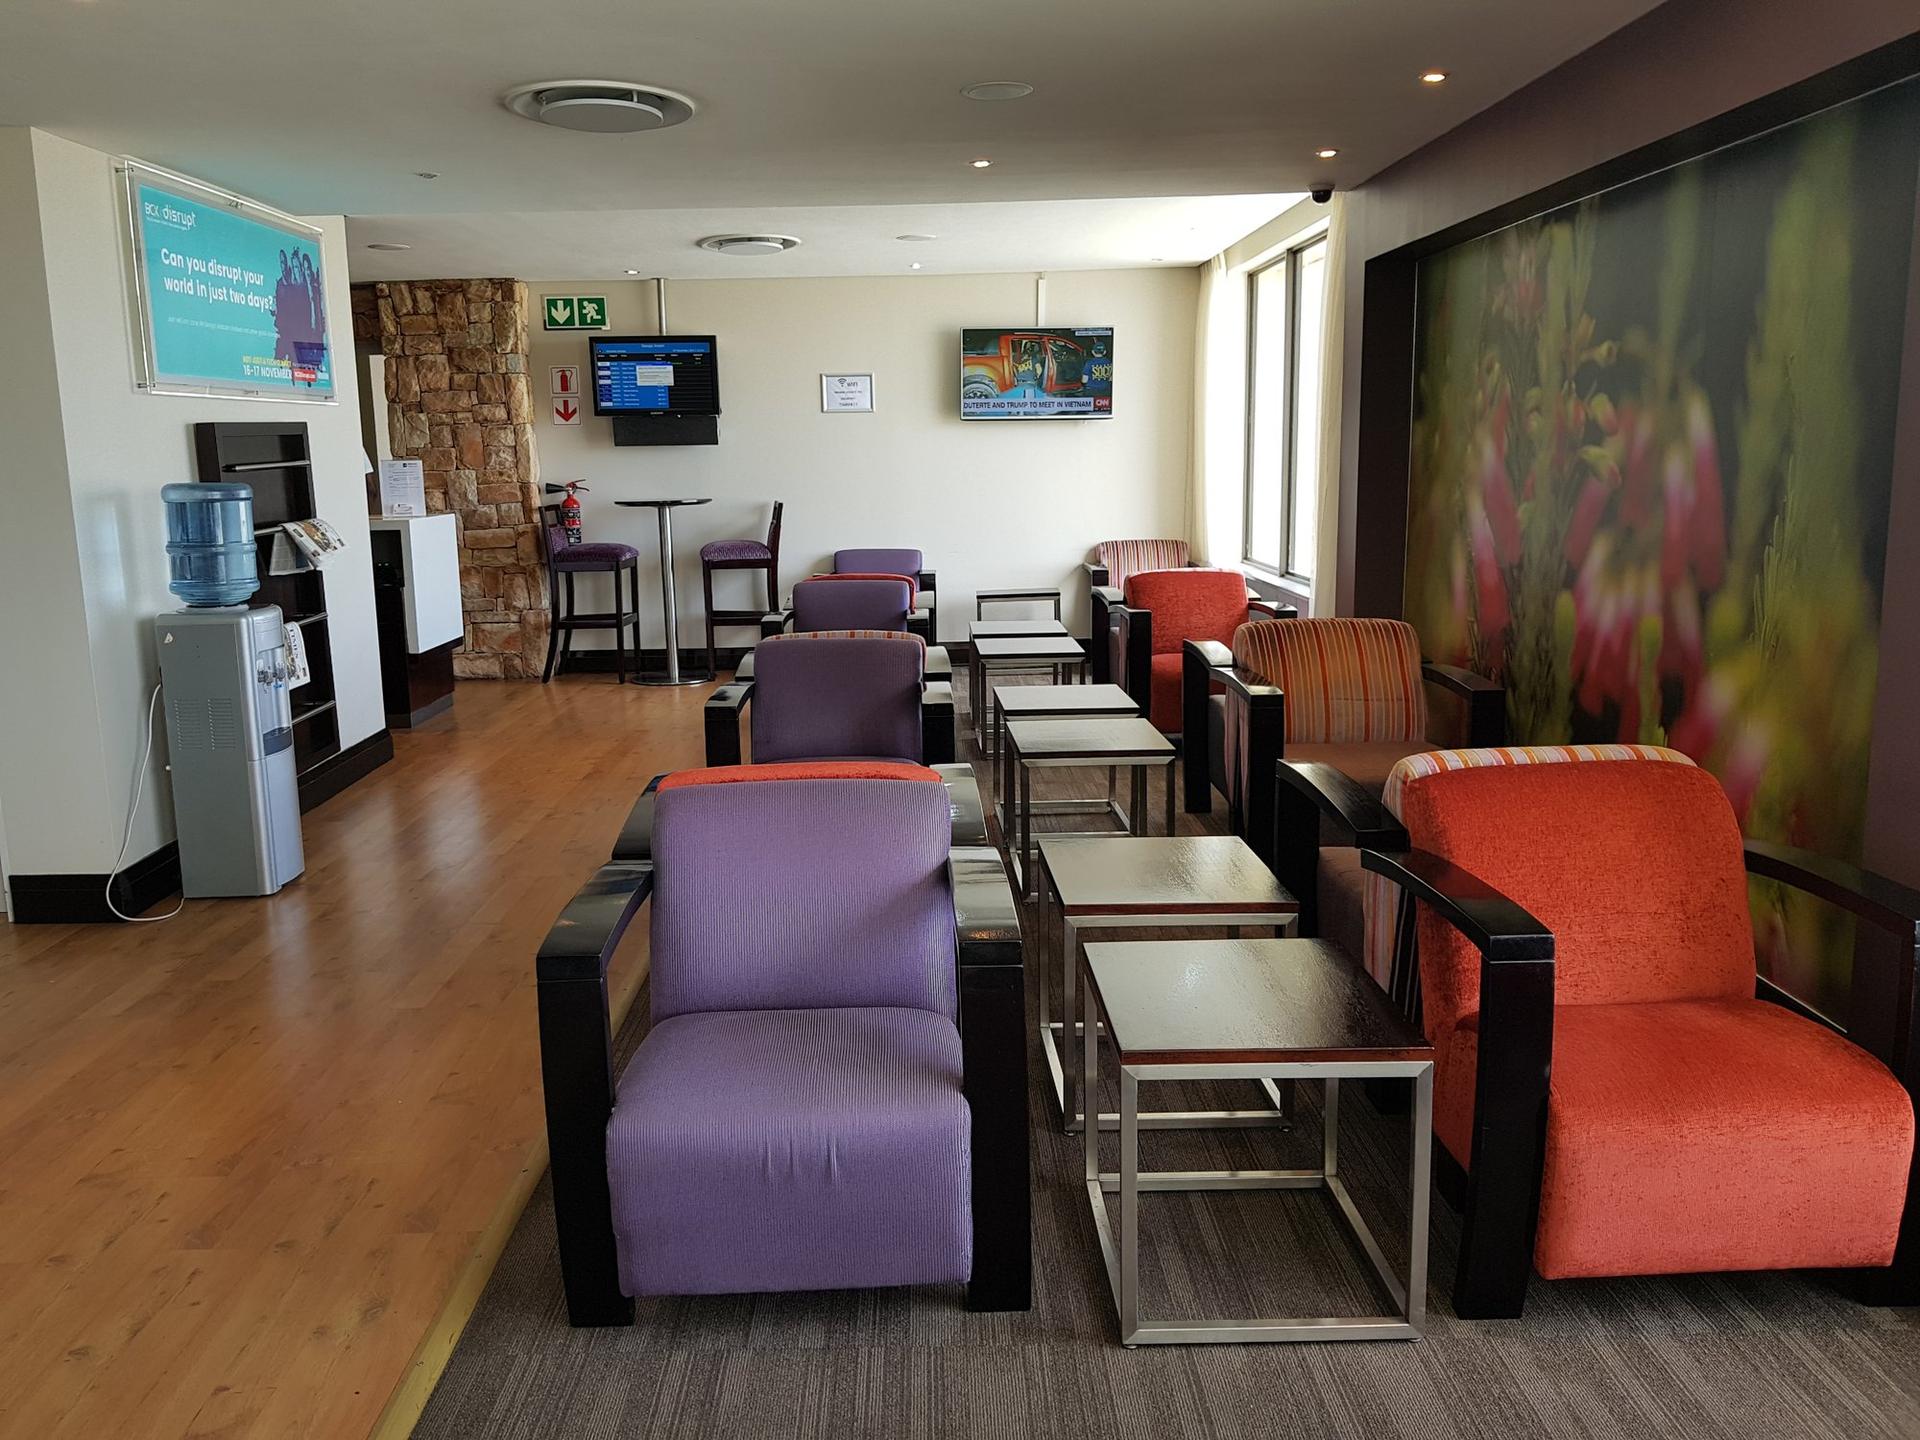 Bidvest Premier Lounge image 2 of 28